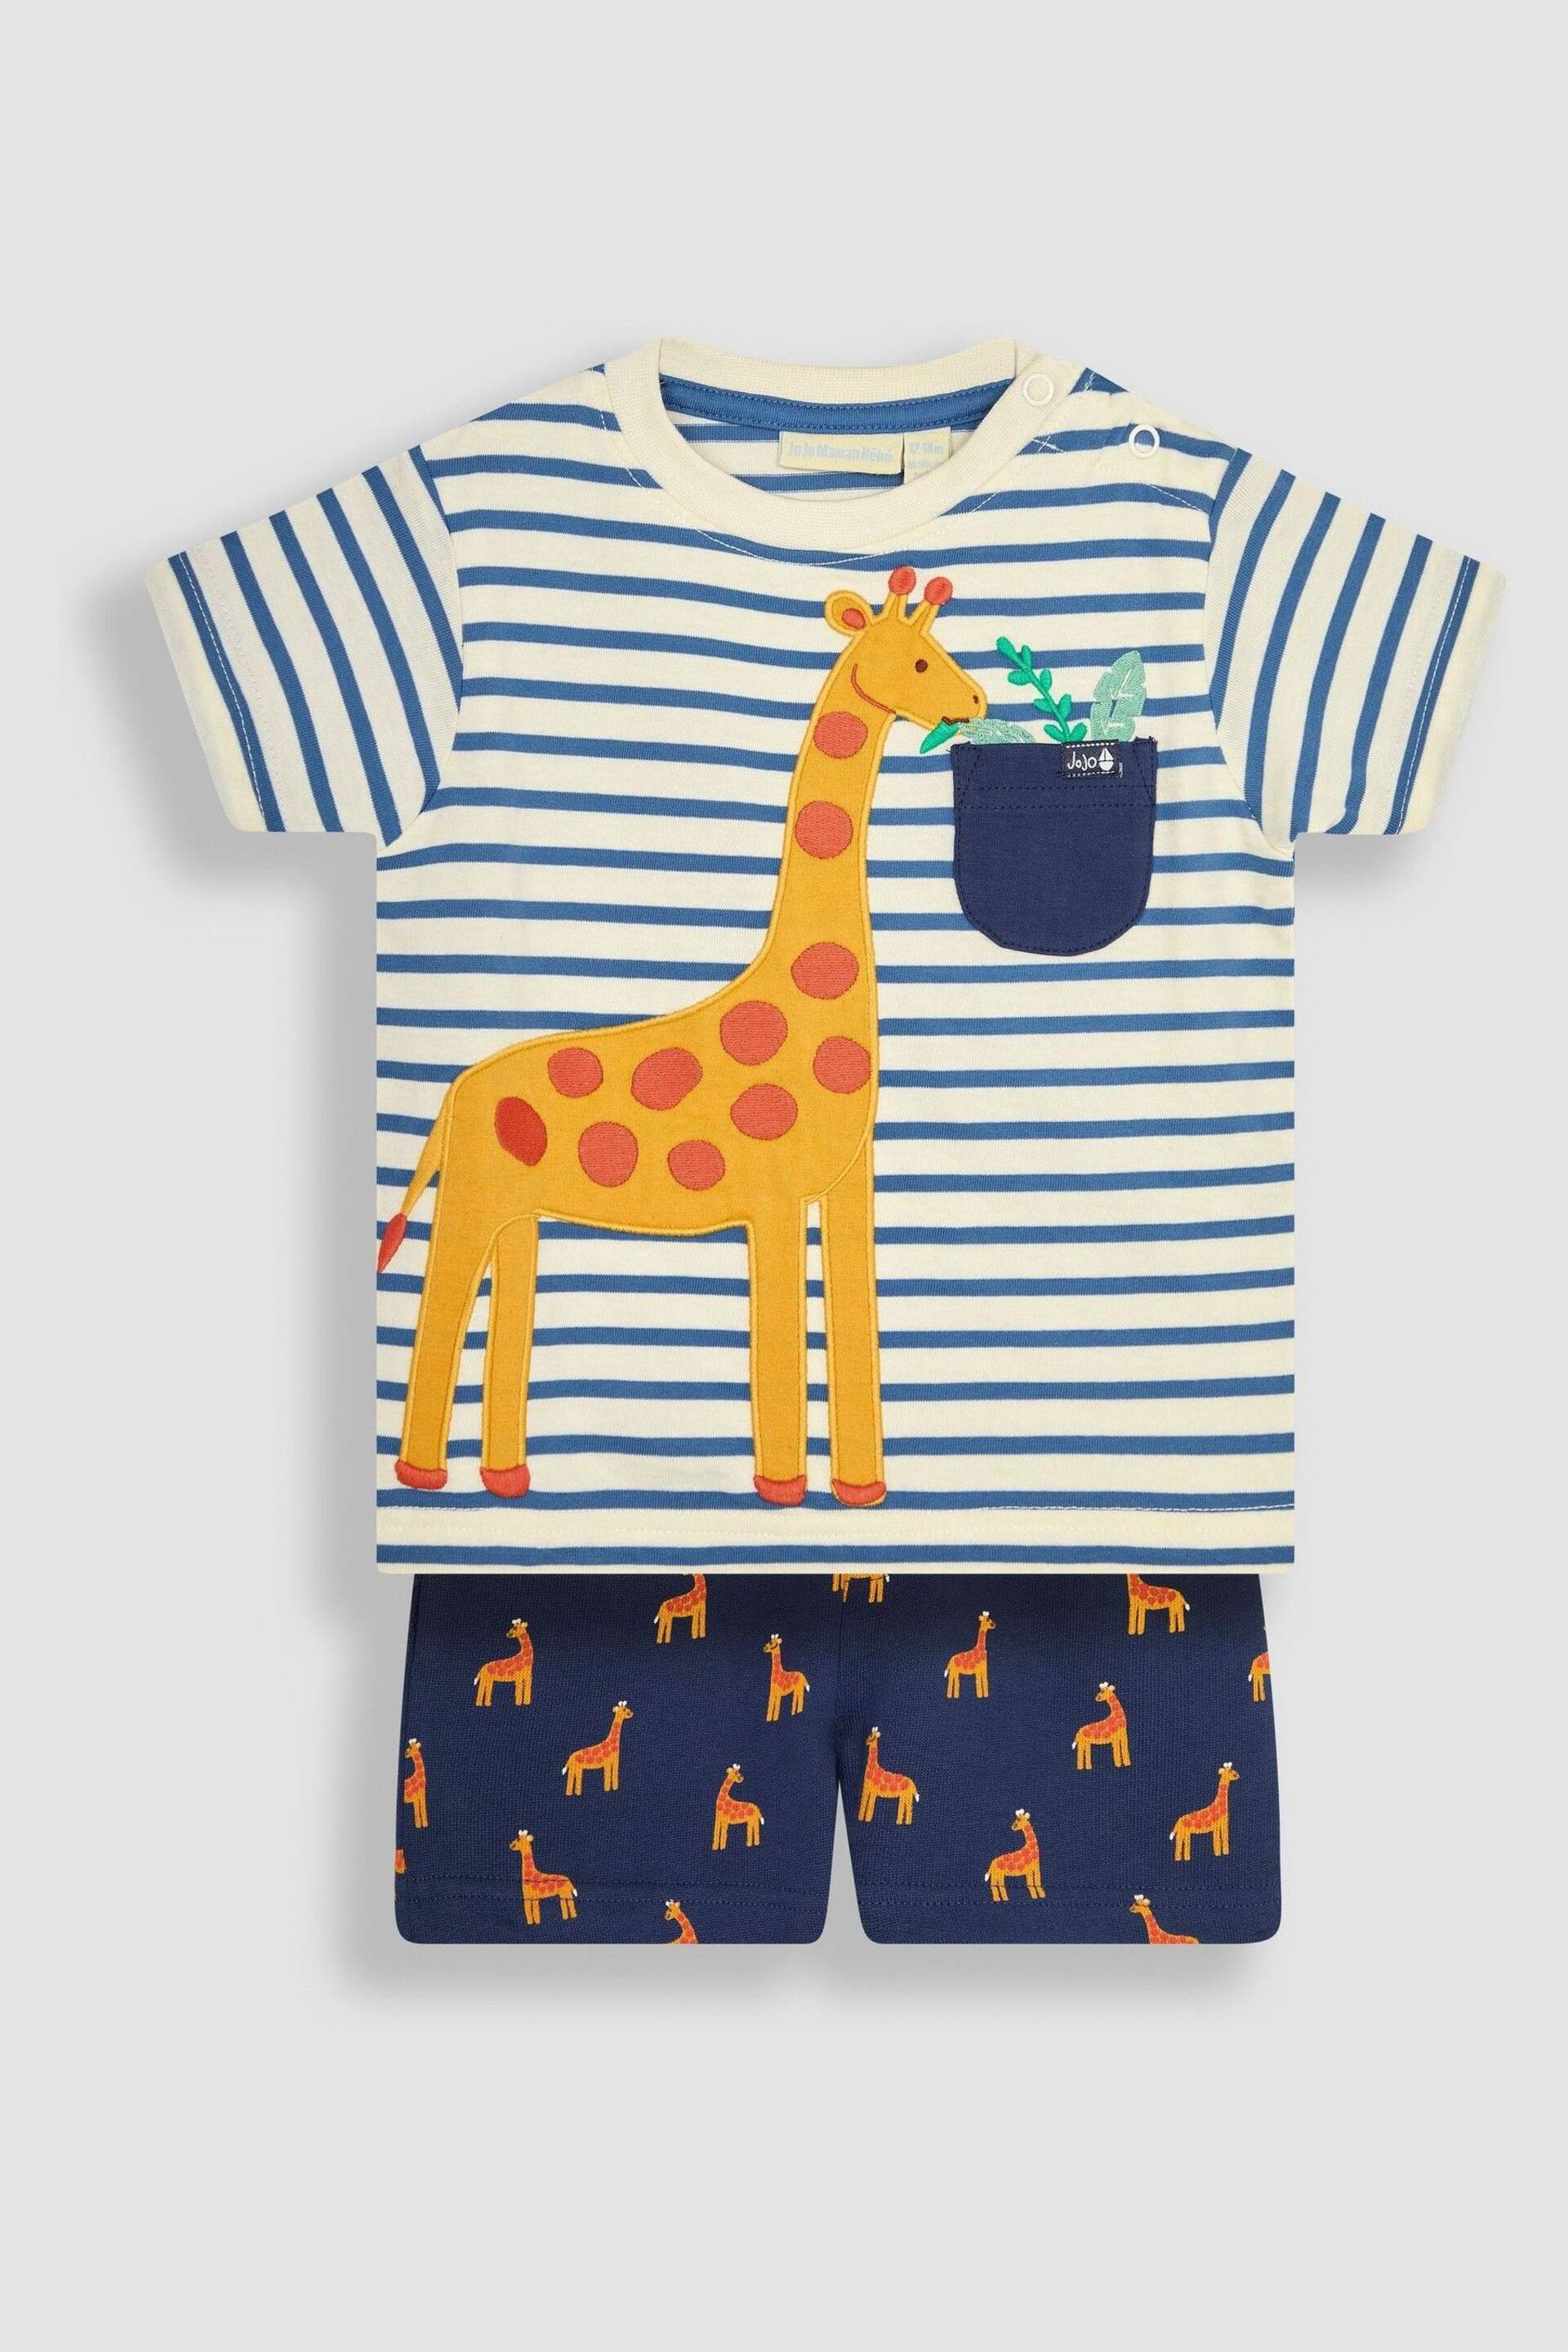 JoJo Maman Bébé Ecru Navy Stripe Giraffe Appliqué T-Shirt and Shorts Set - Image 1 of 4